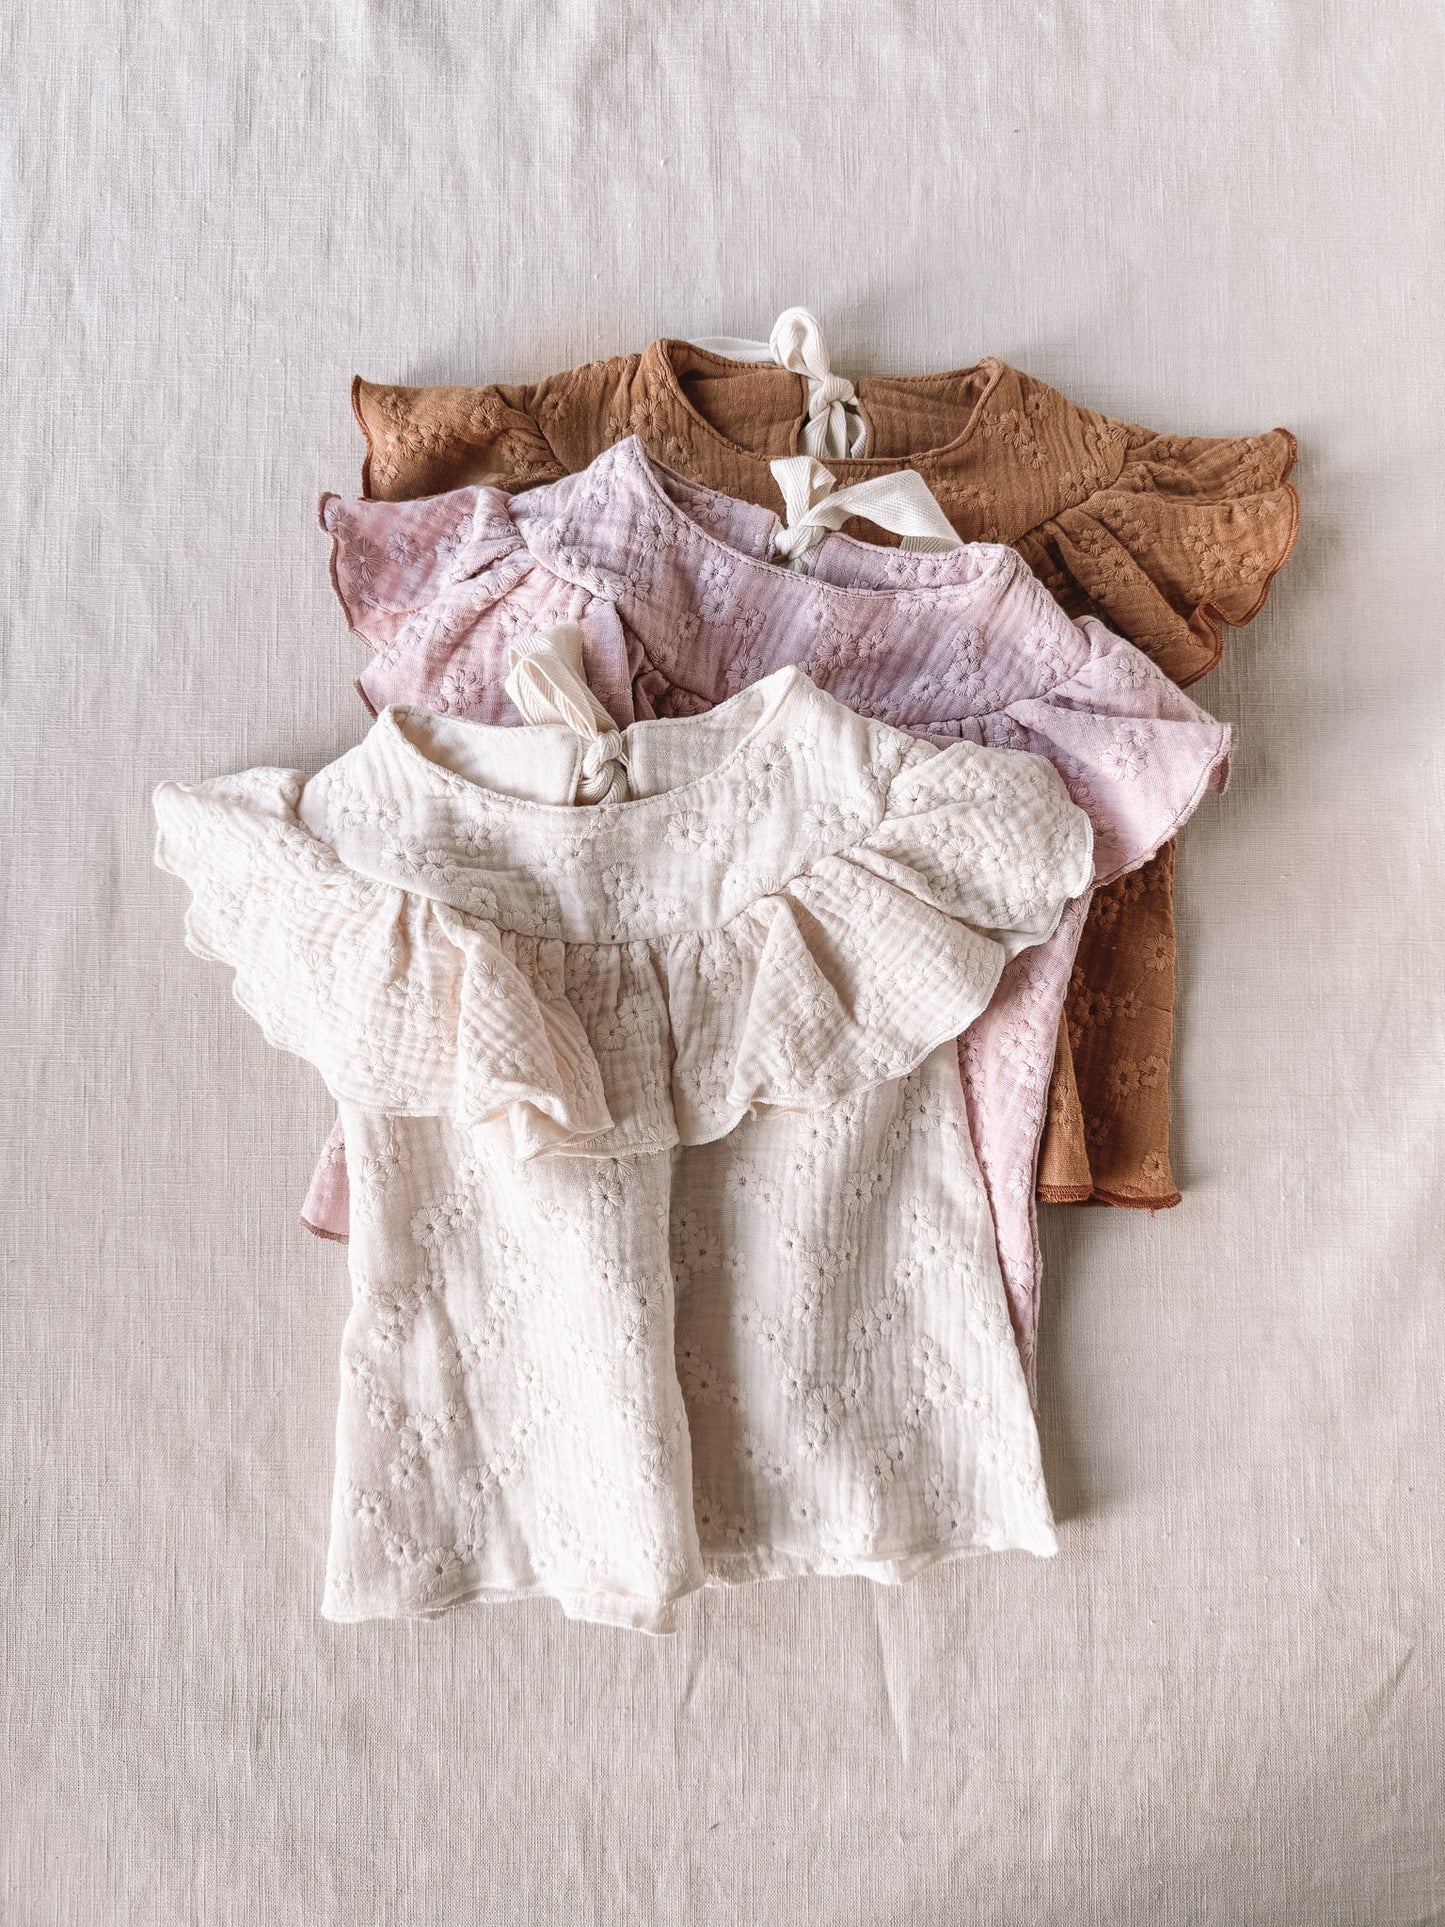 Naya baby dress / embroidered blush